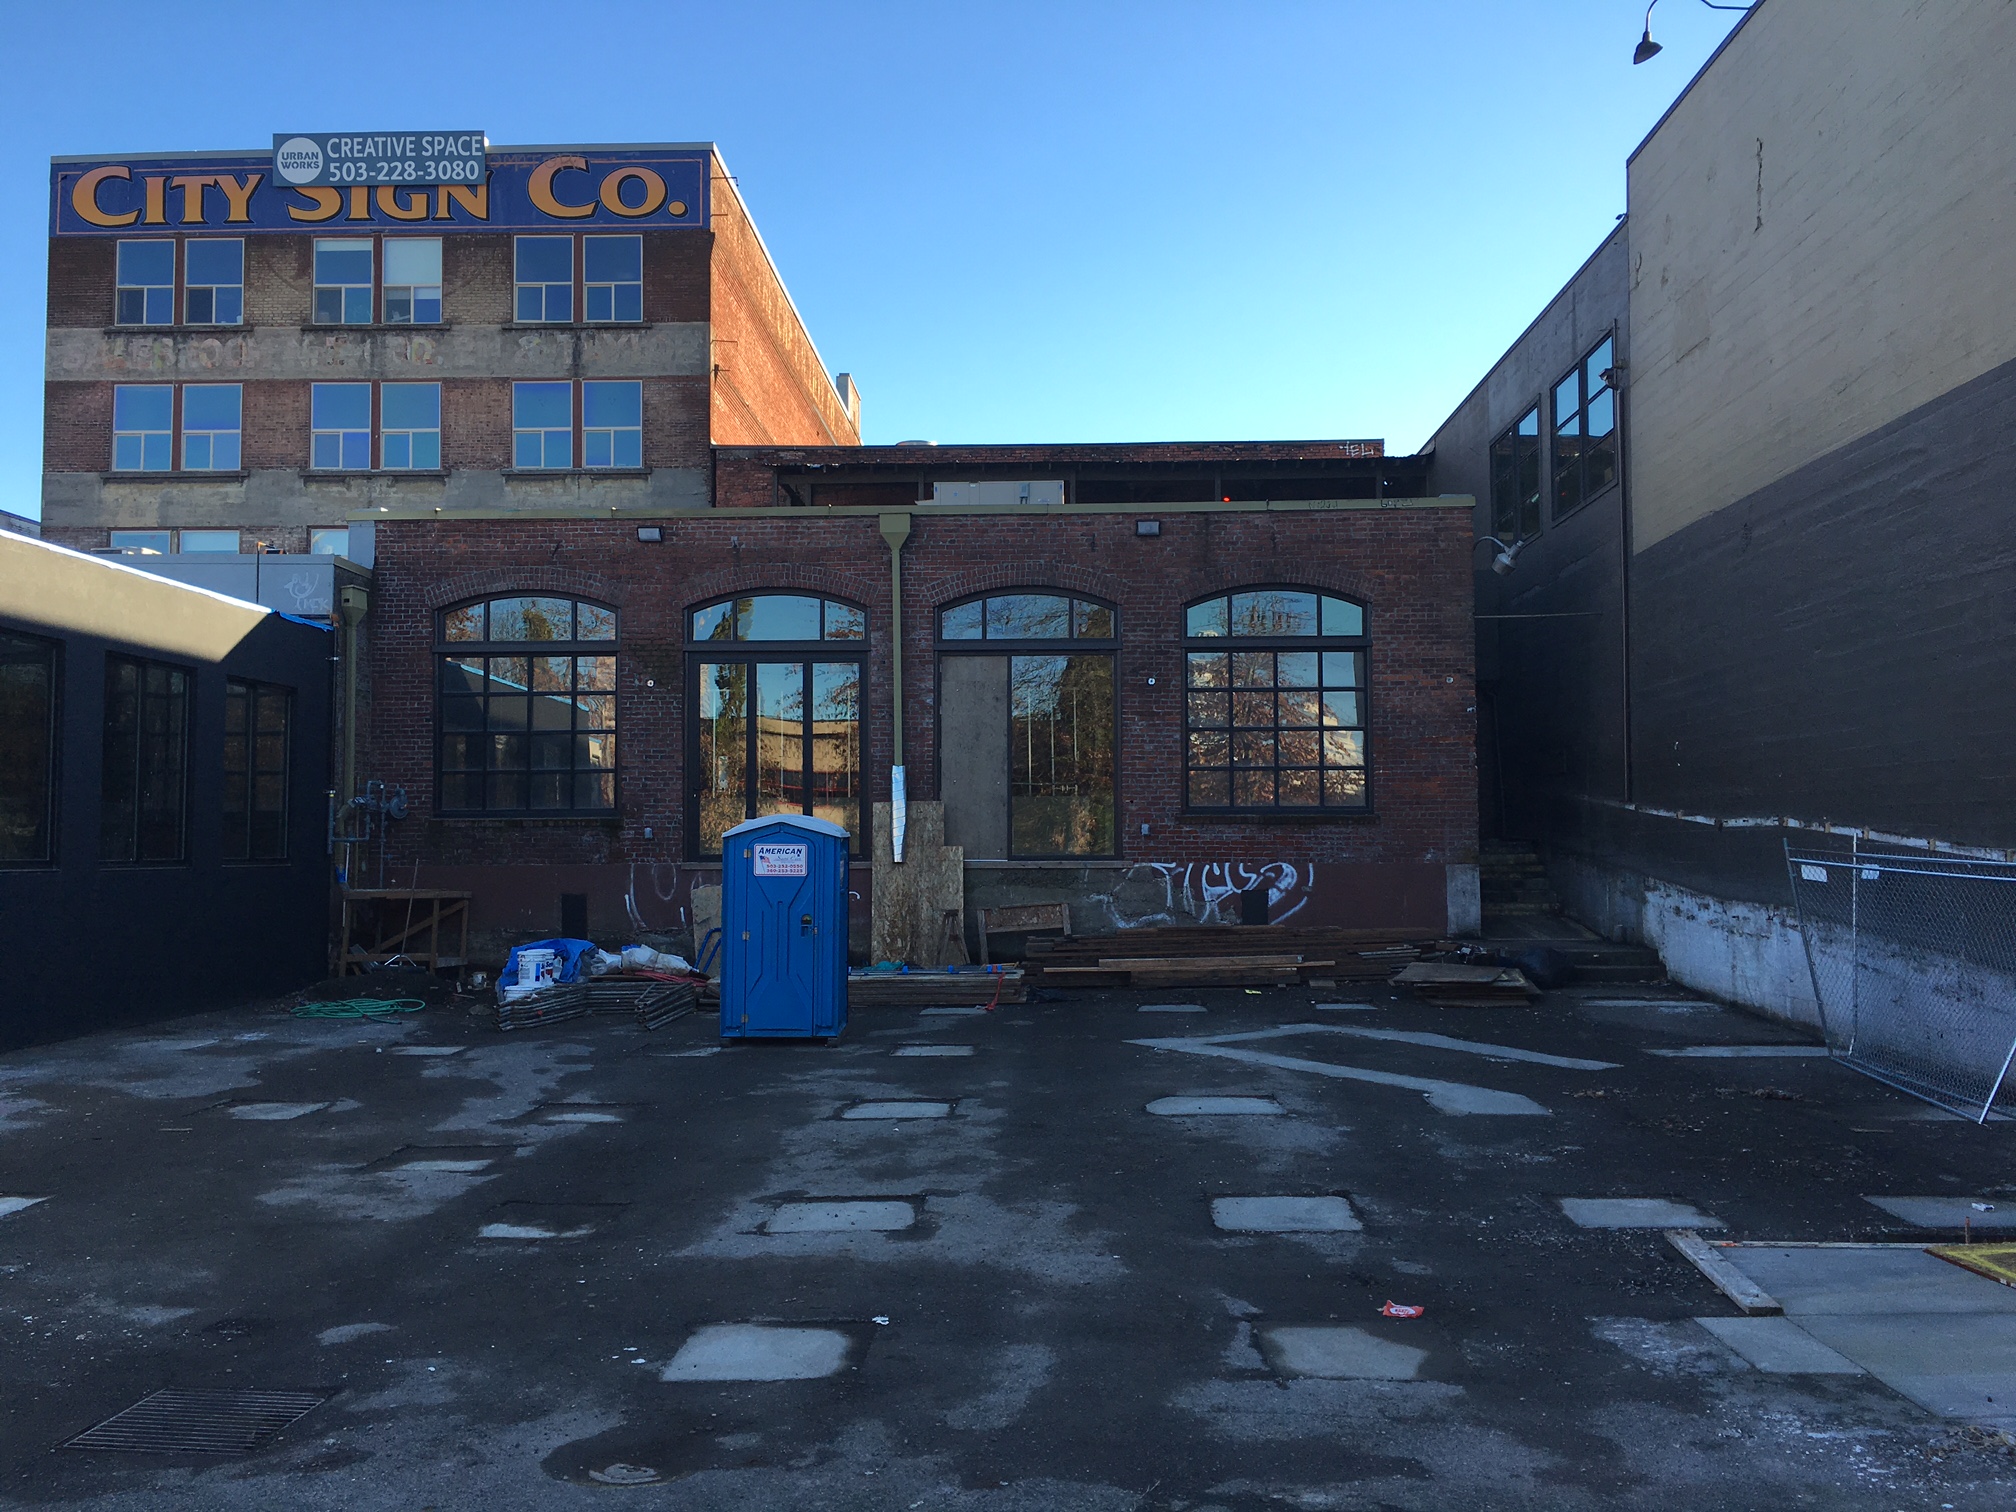 Future home of Wayfinder Beer in Portland, OR